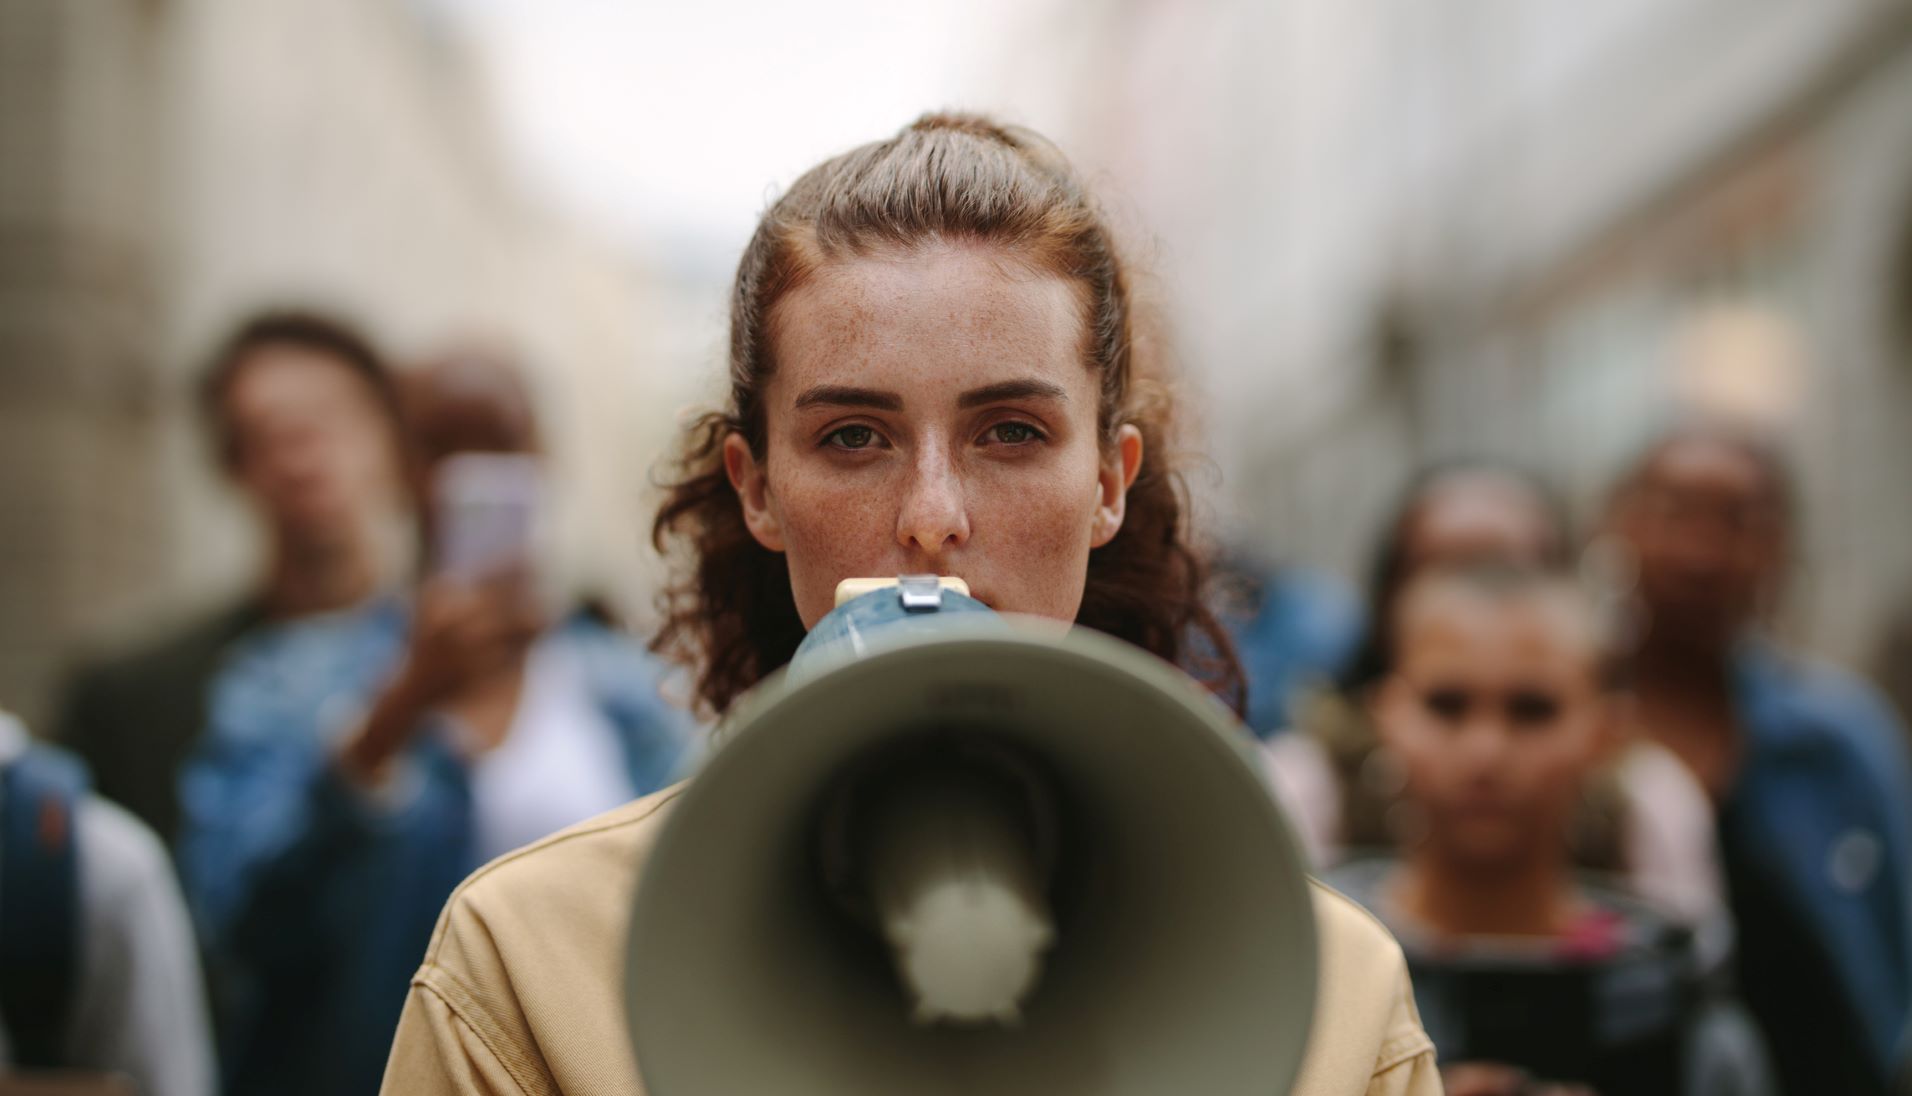 female activist protesting with megaphone